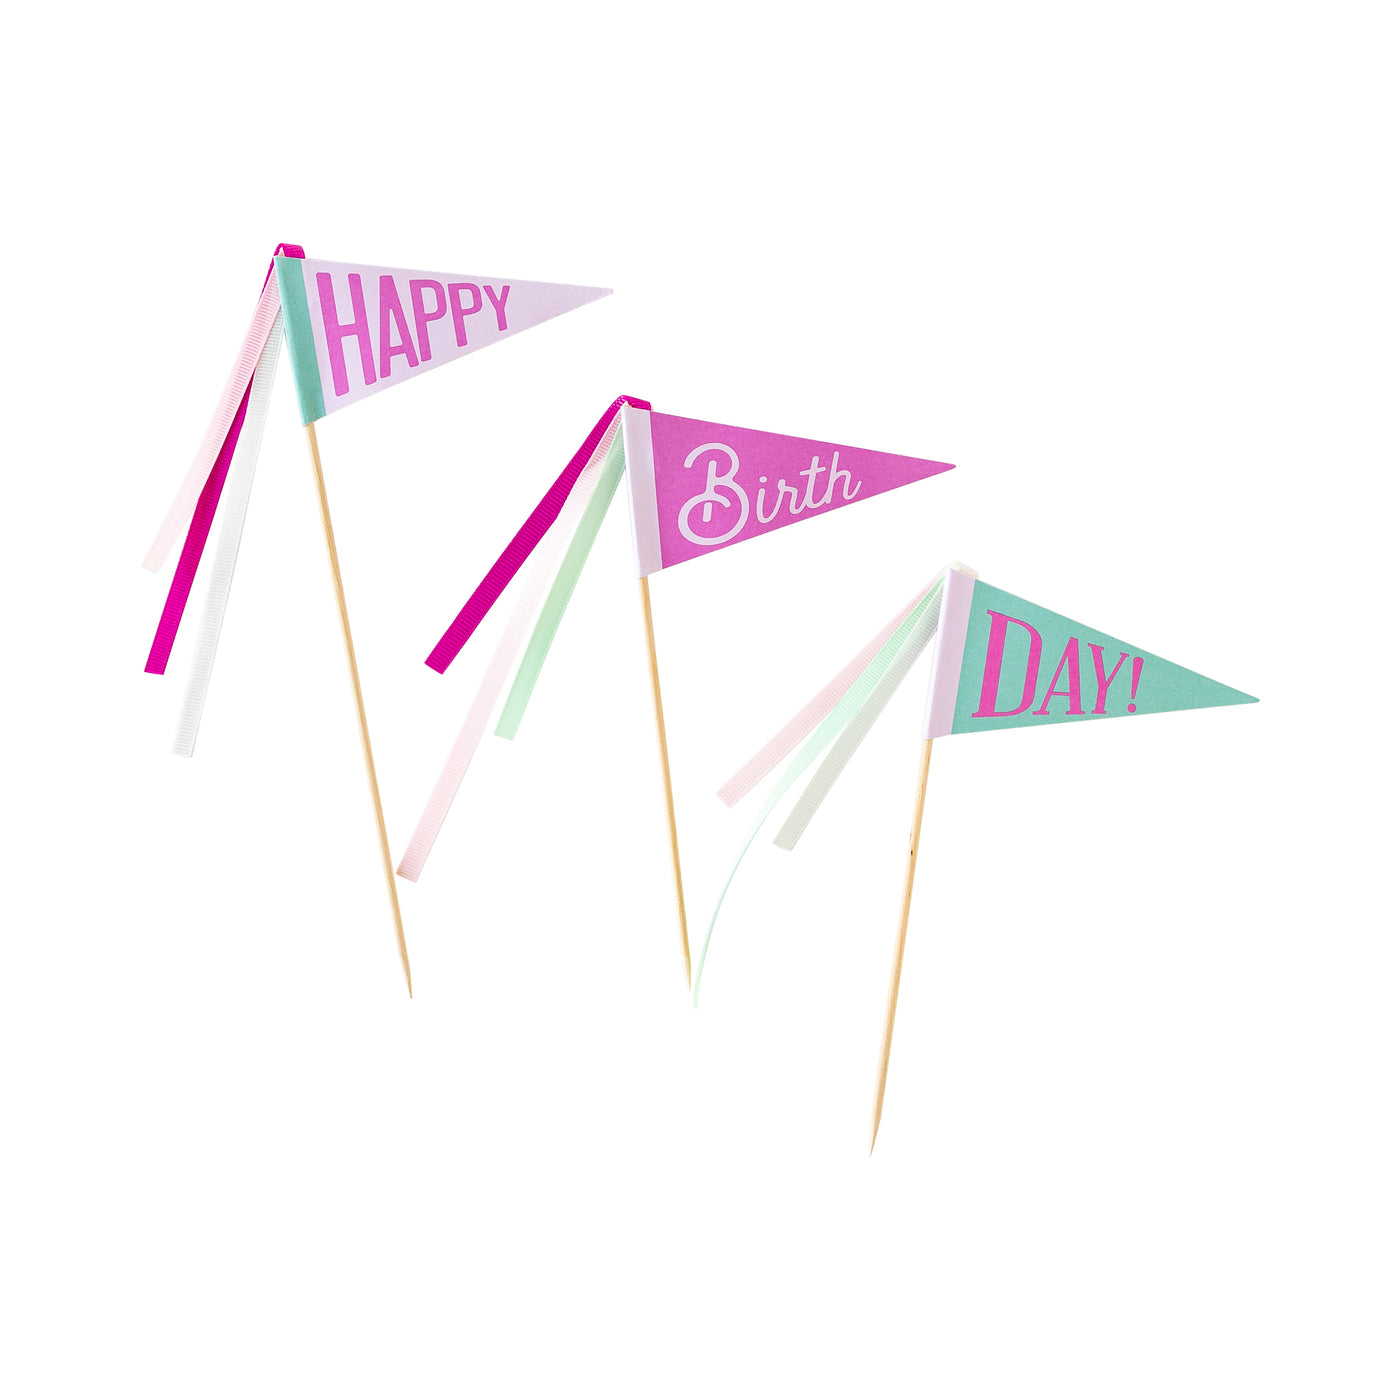 HBD911 - Pink Happy Birthday Cake Topper